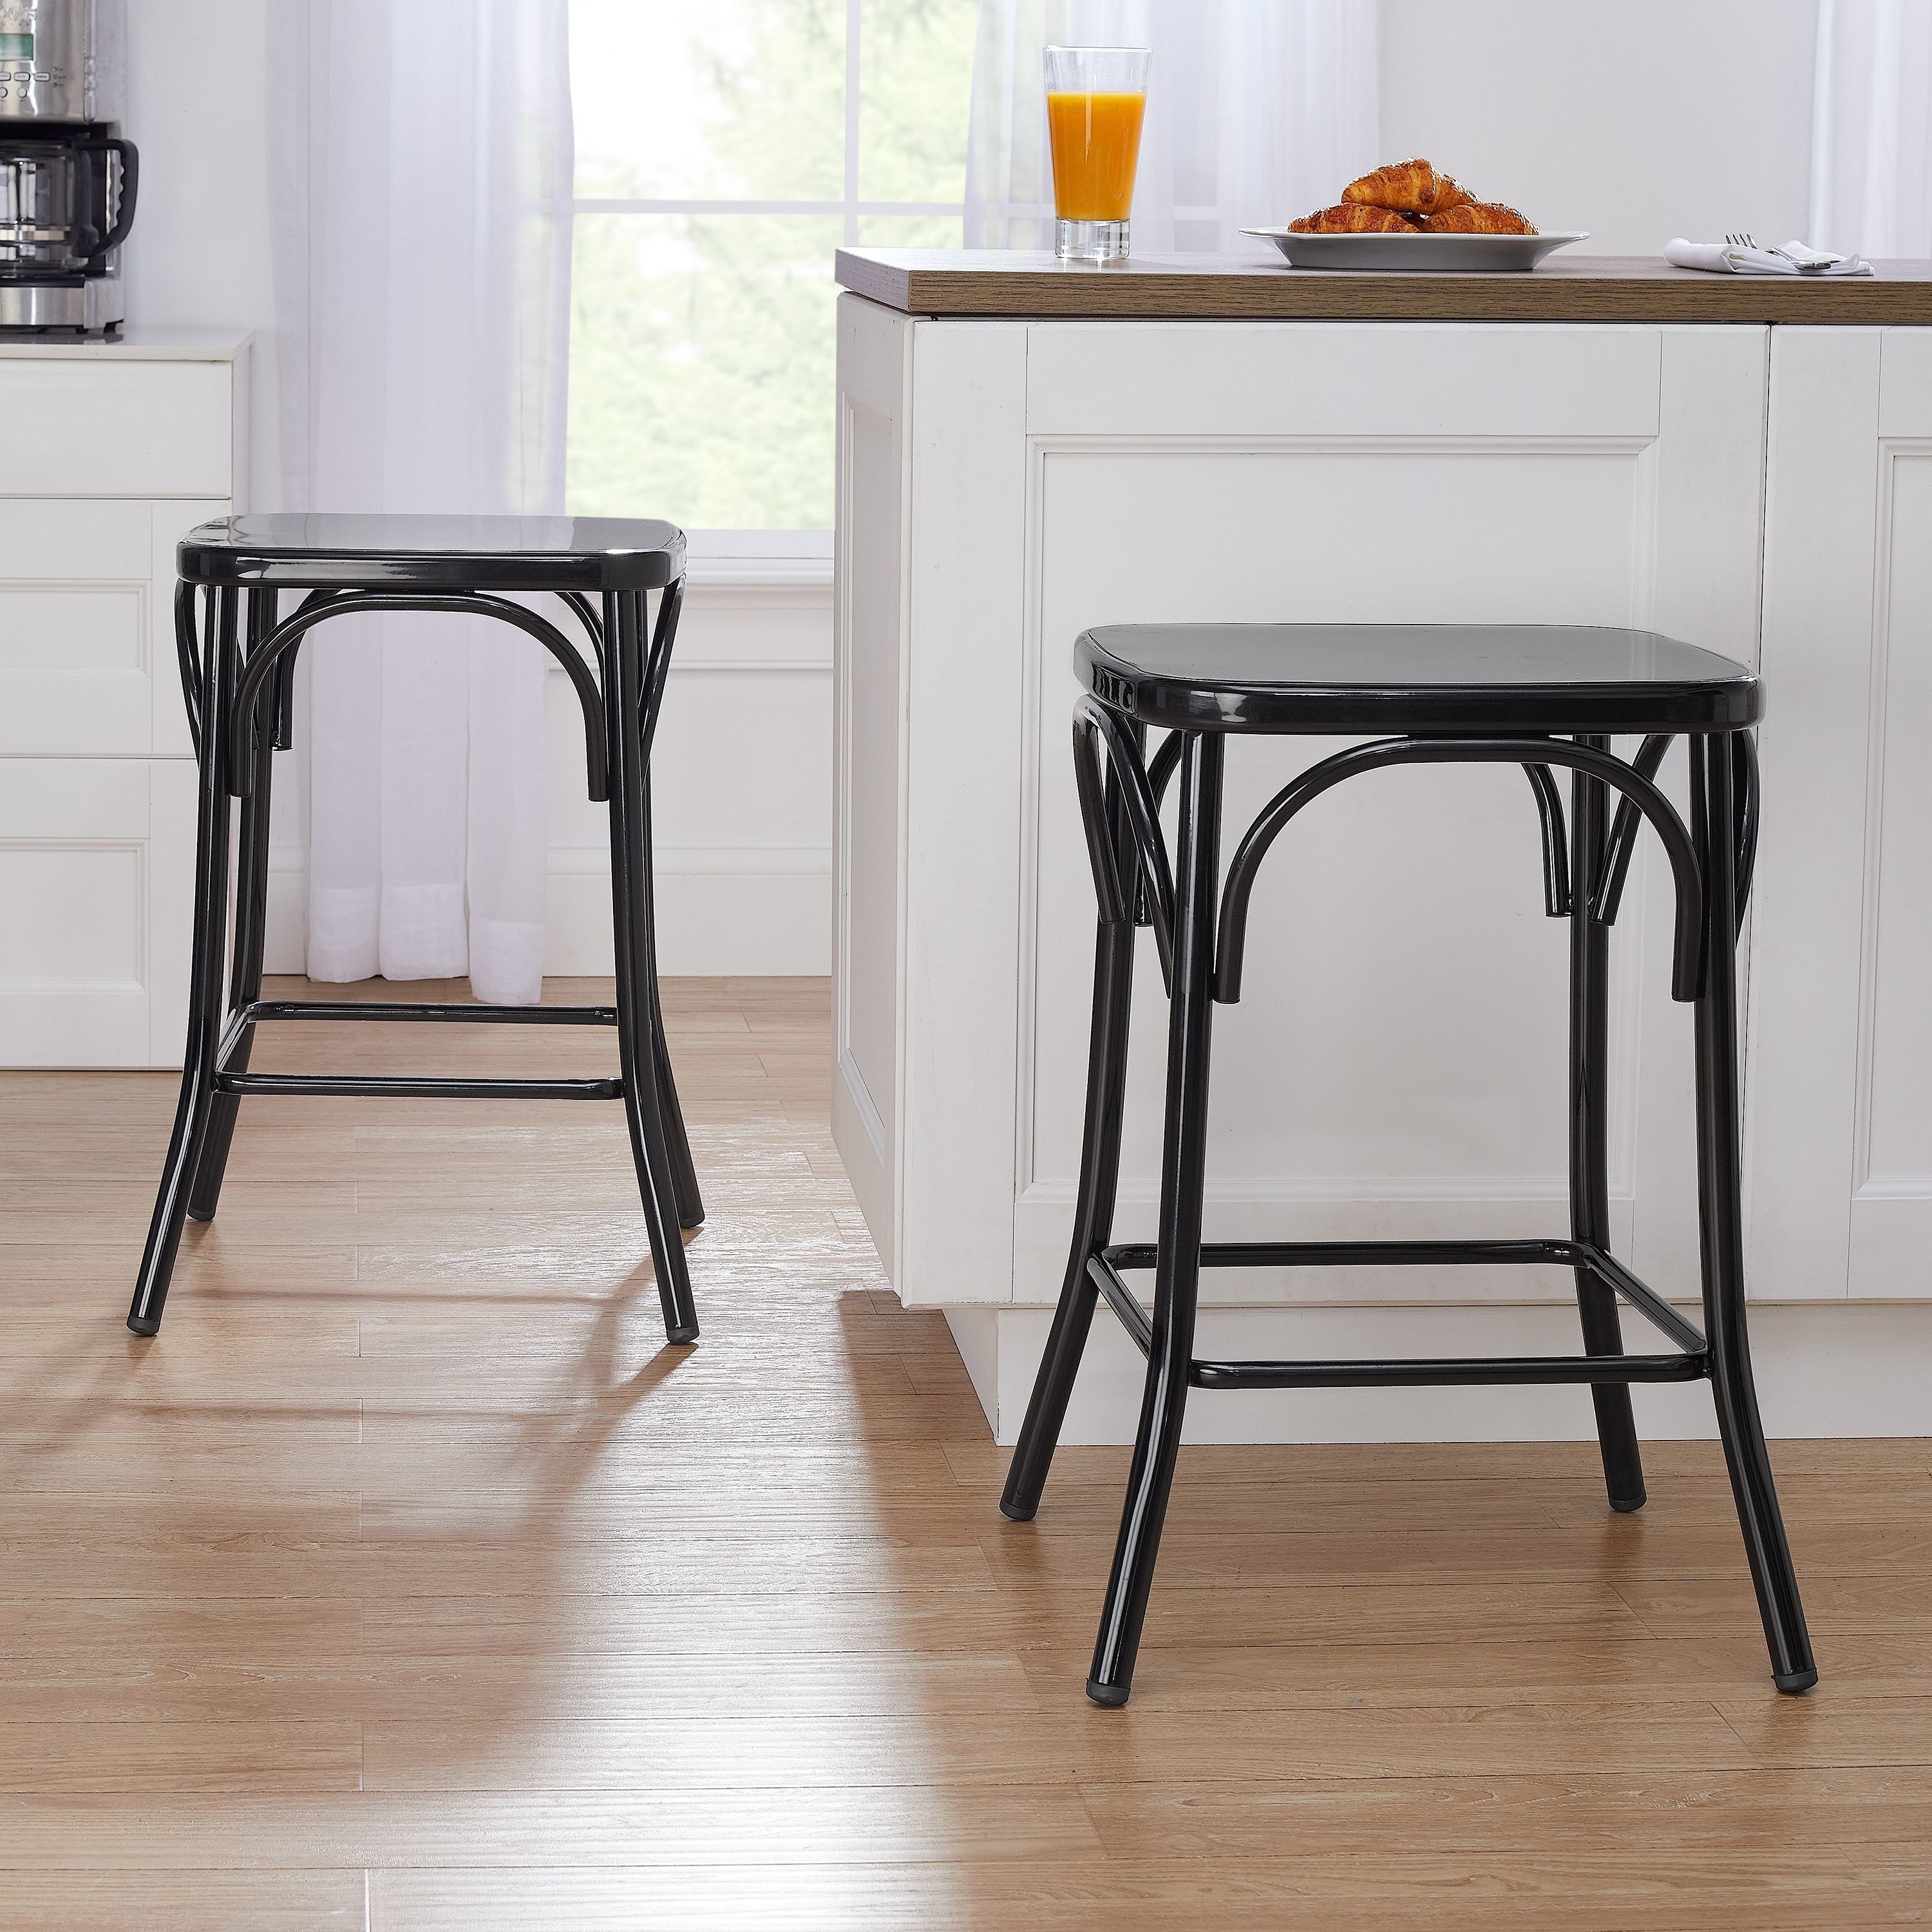 two black counter stools sitting around a kitchen island